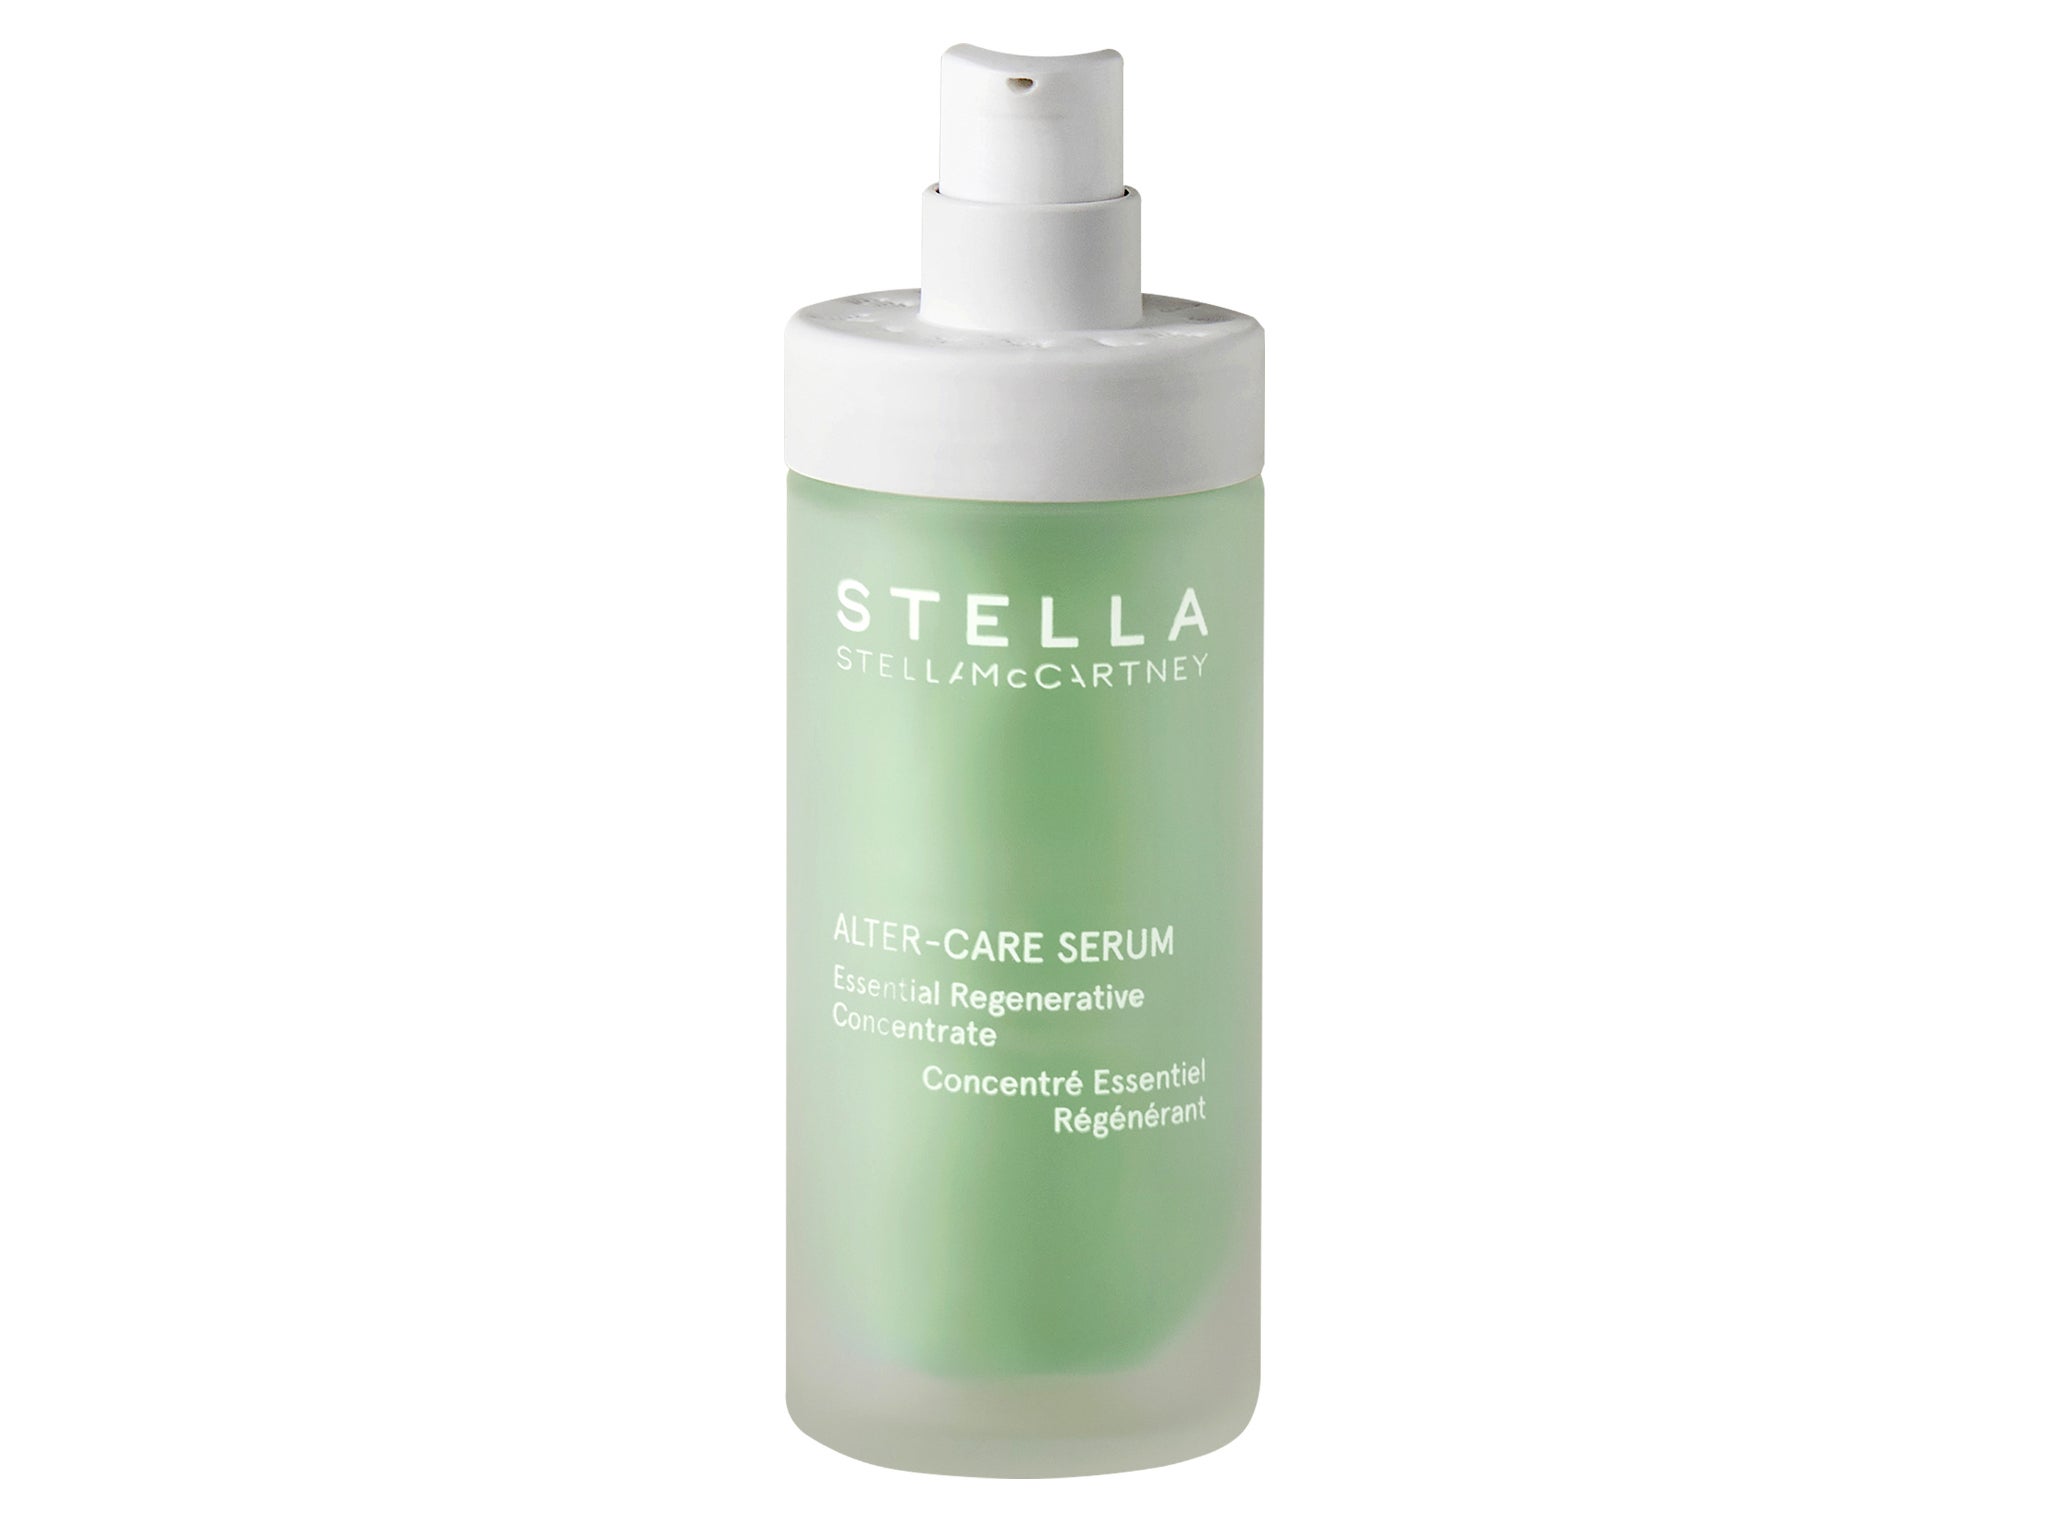 Stella by Stella McCartney alter-care serum